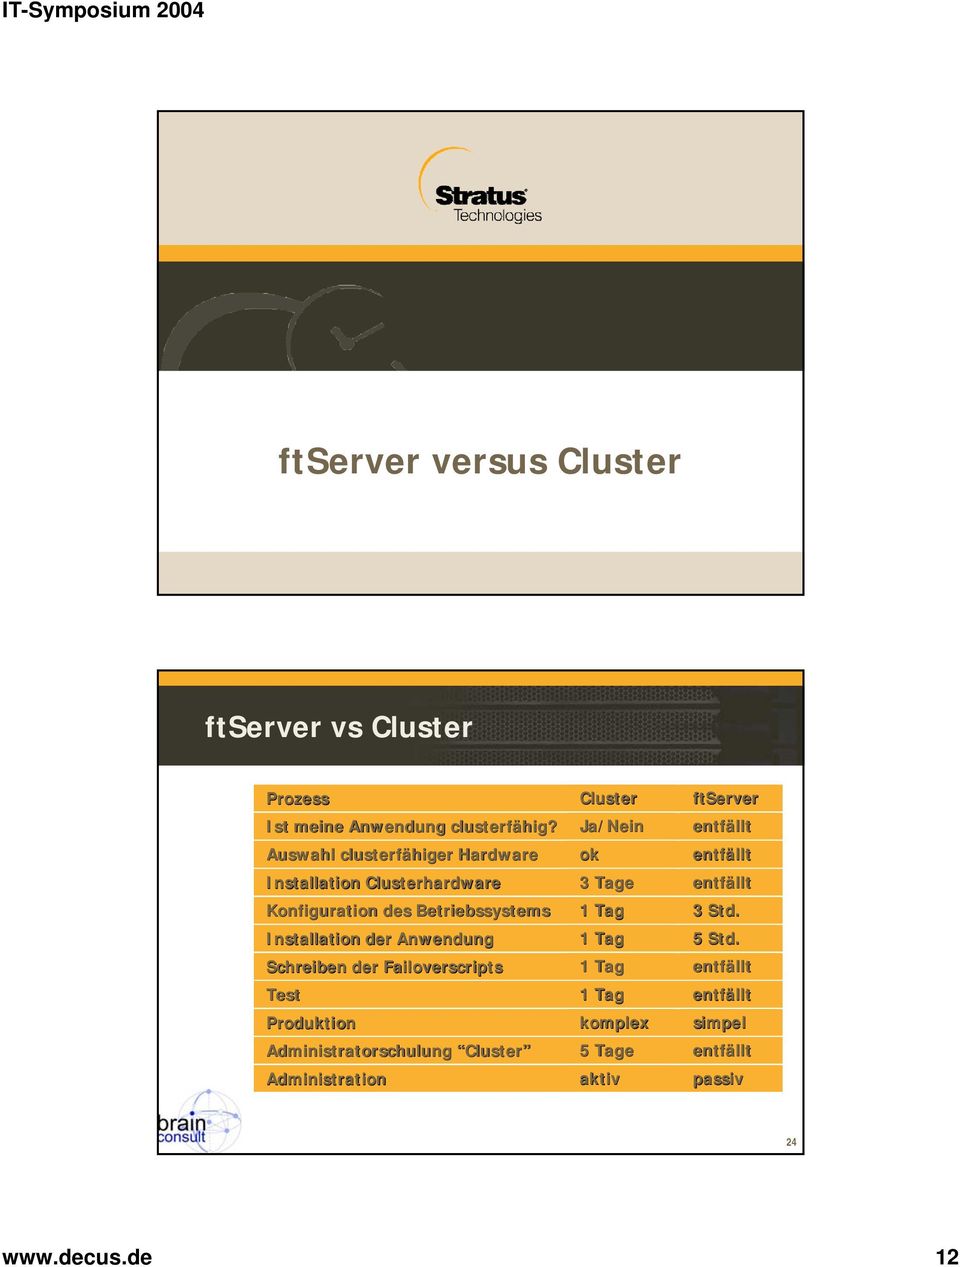 Anwendung Schreiben der Failoverscripts Test Produktion Administratorschulung Cluster Cluster Ja/Nein ok ftserver